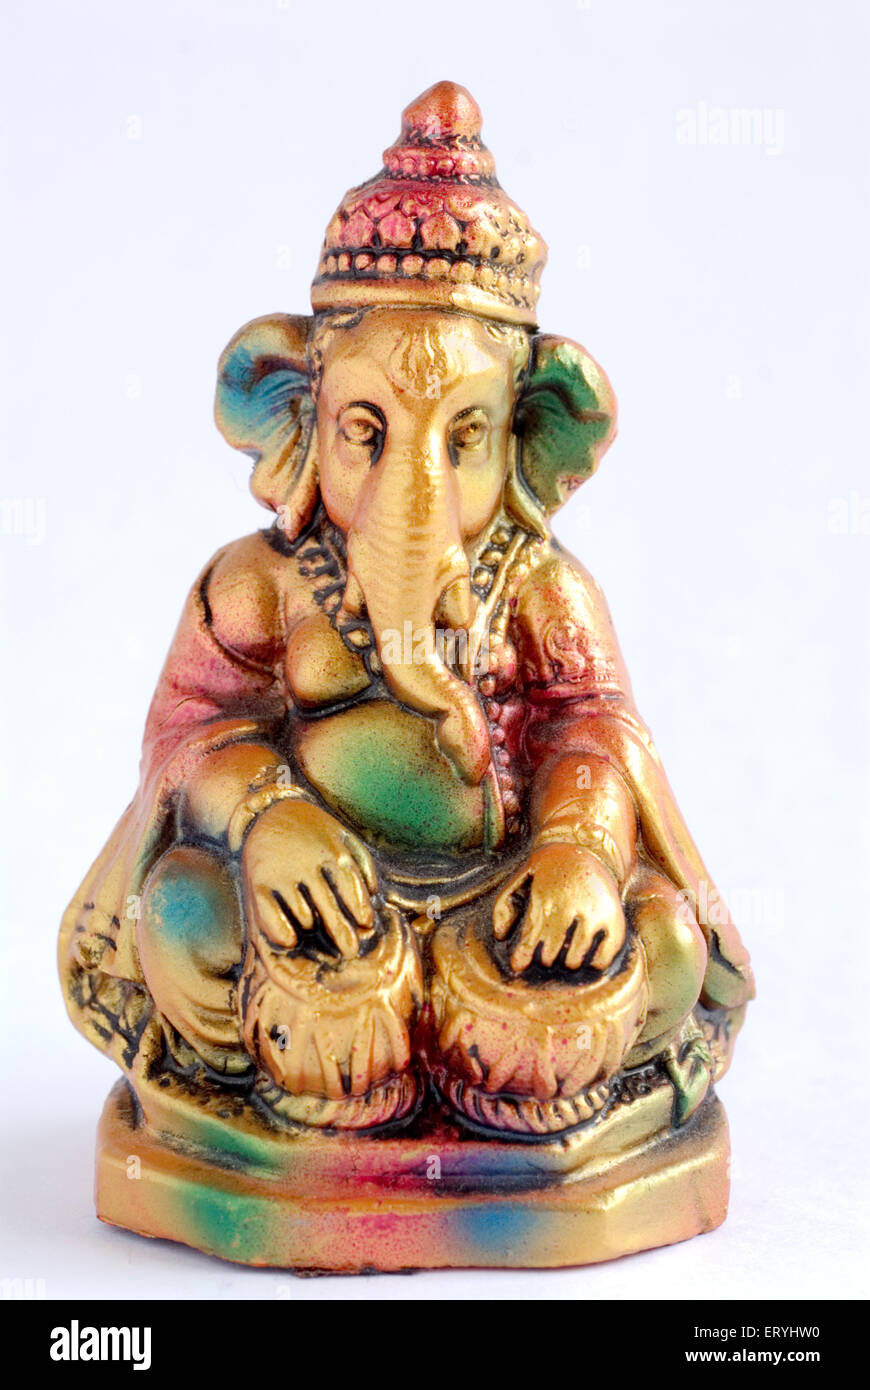 Colourful statue of lord Ganesha elephant headed god playing tabla ; India Stock Photo